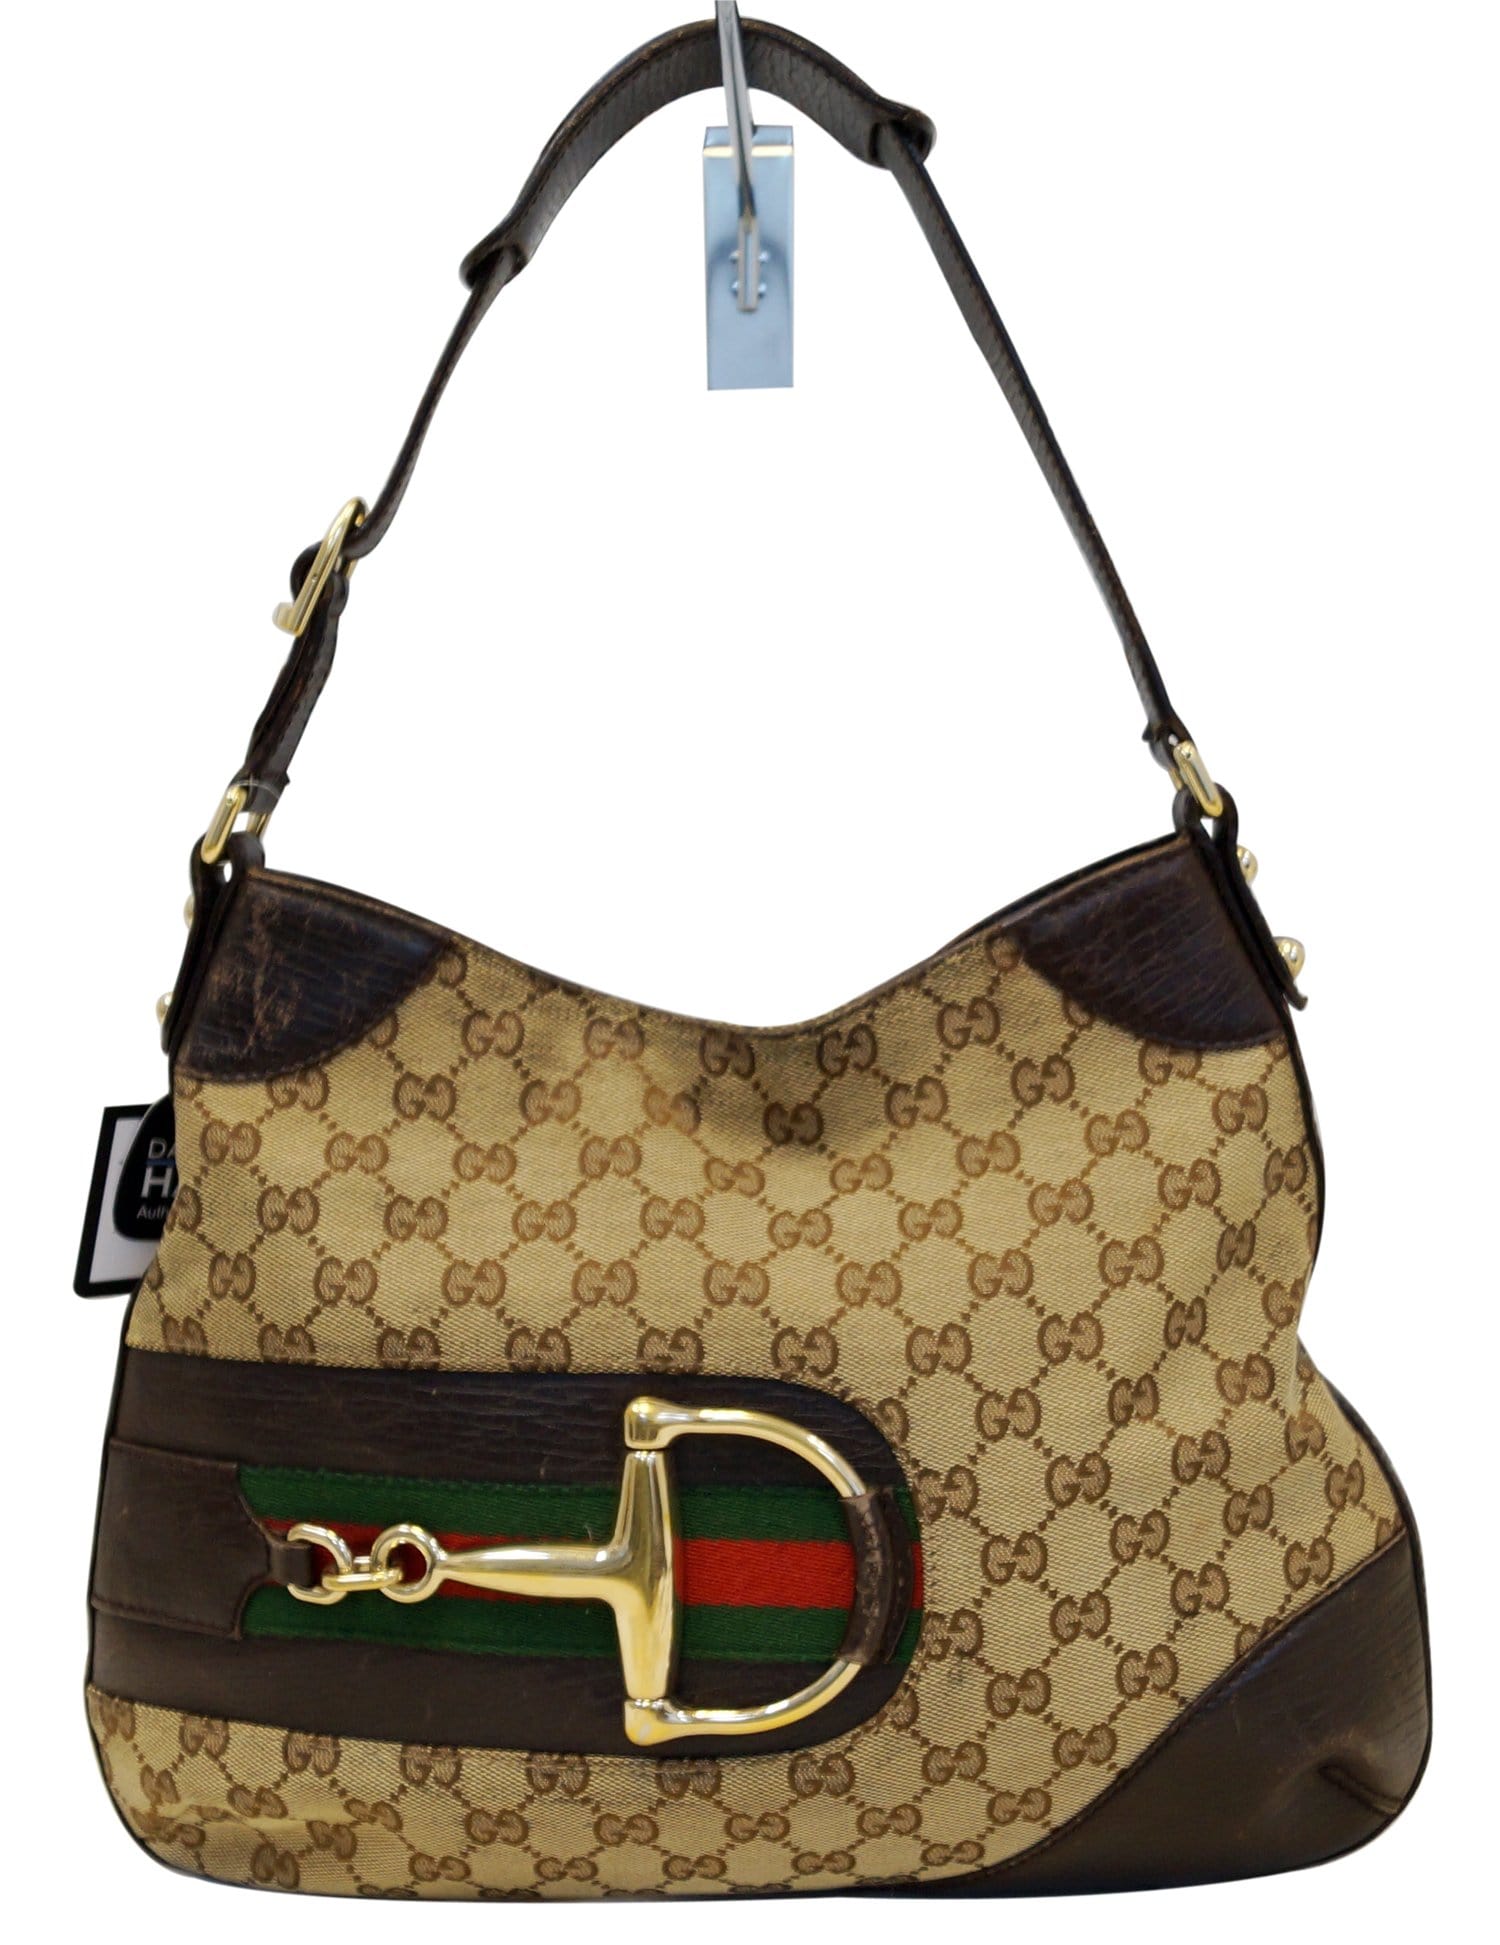 Gucci Horsebit 1955 shoulder bag in Beige GG Canvas